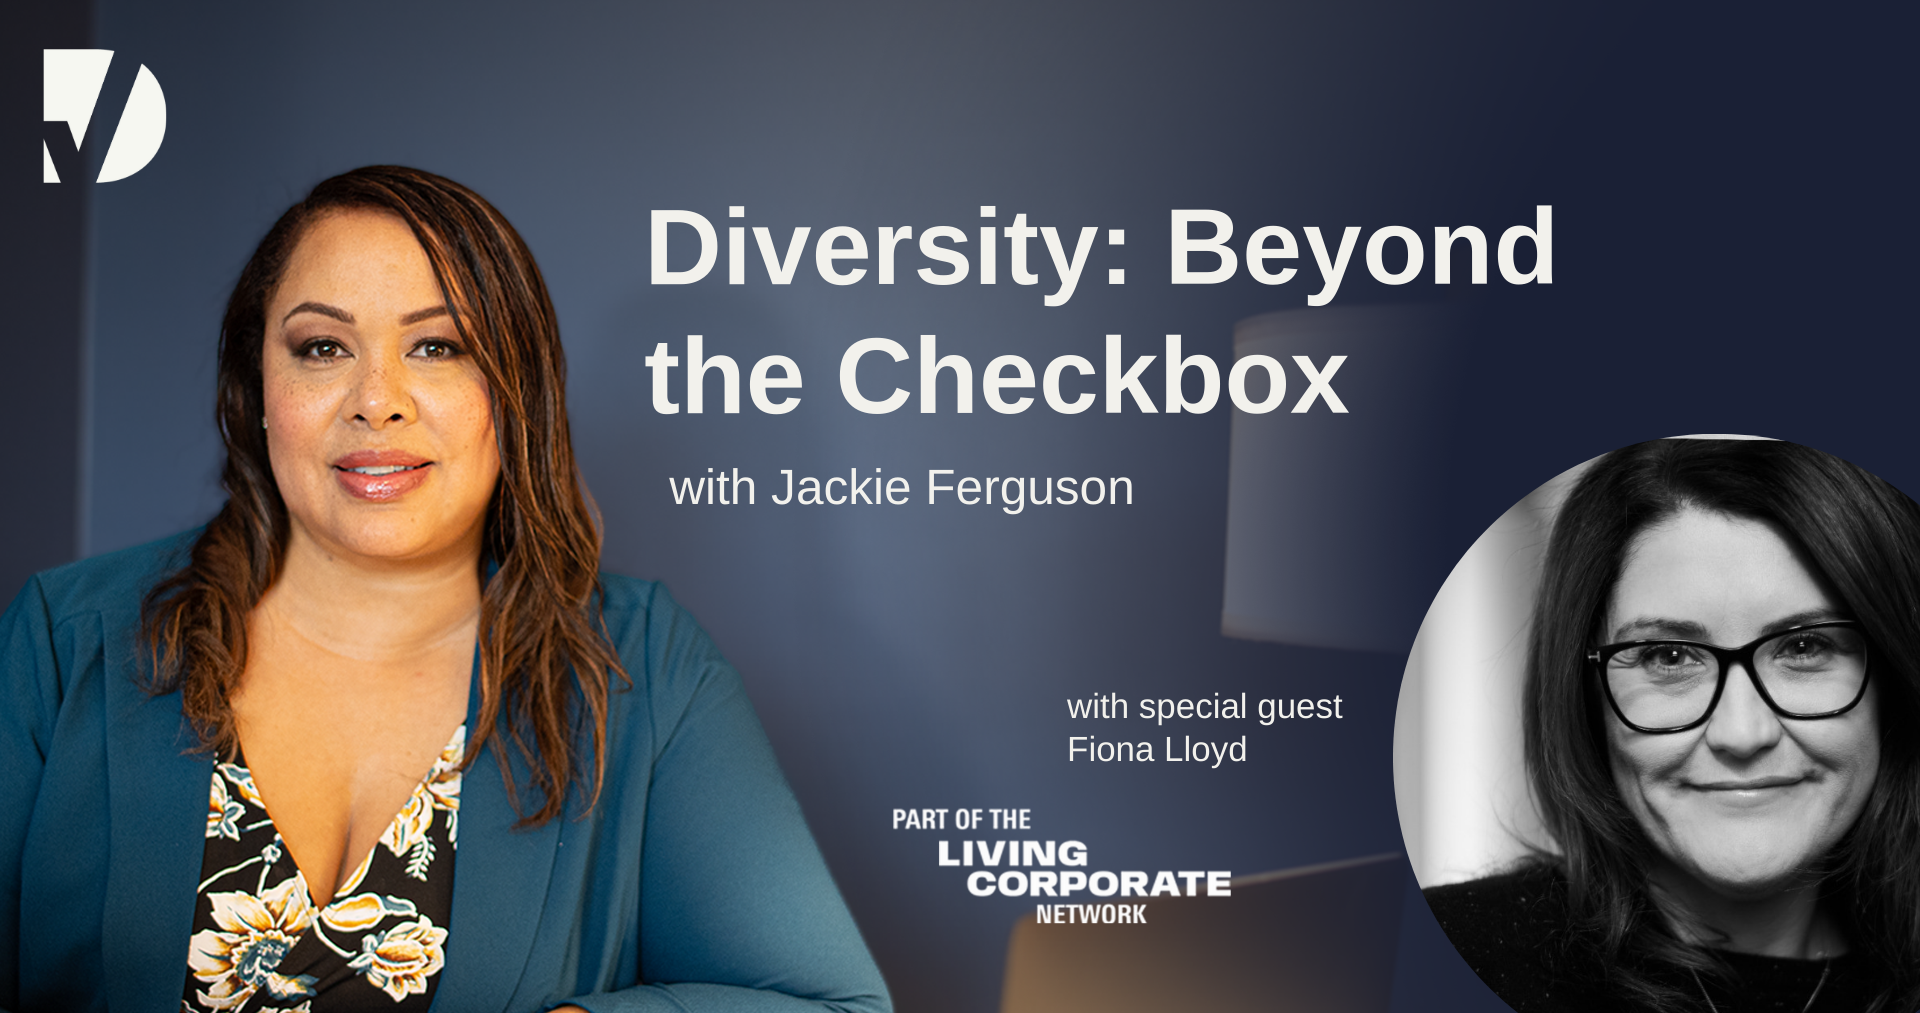 Jackie Ferguson prepares to interview Fiona Lloyd on the next episode of 'Diversity: Beyond the Checkbox.'